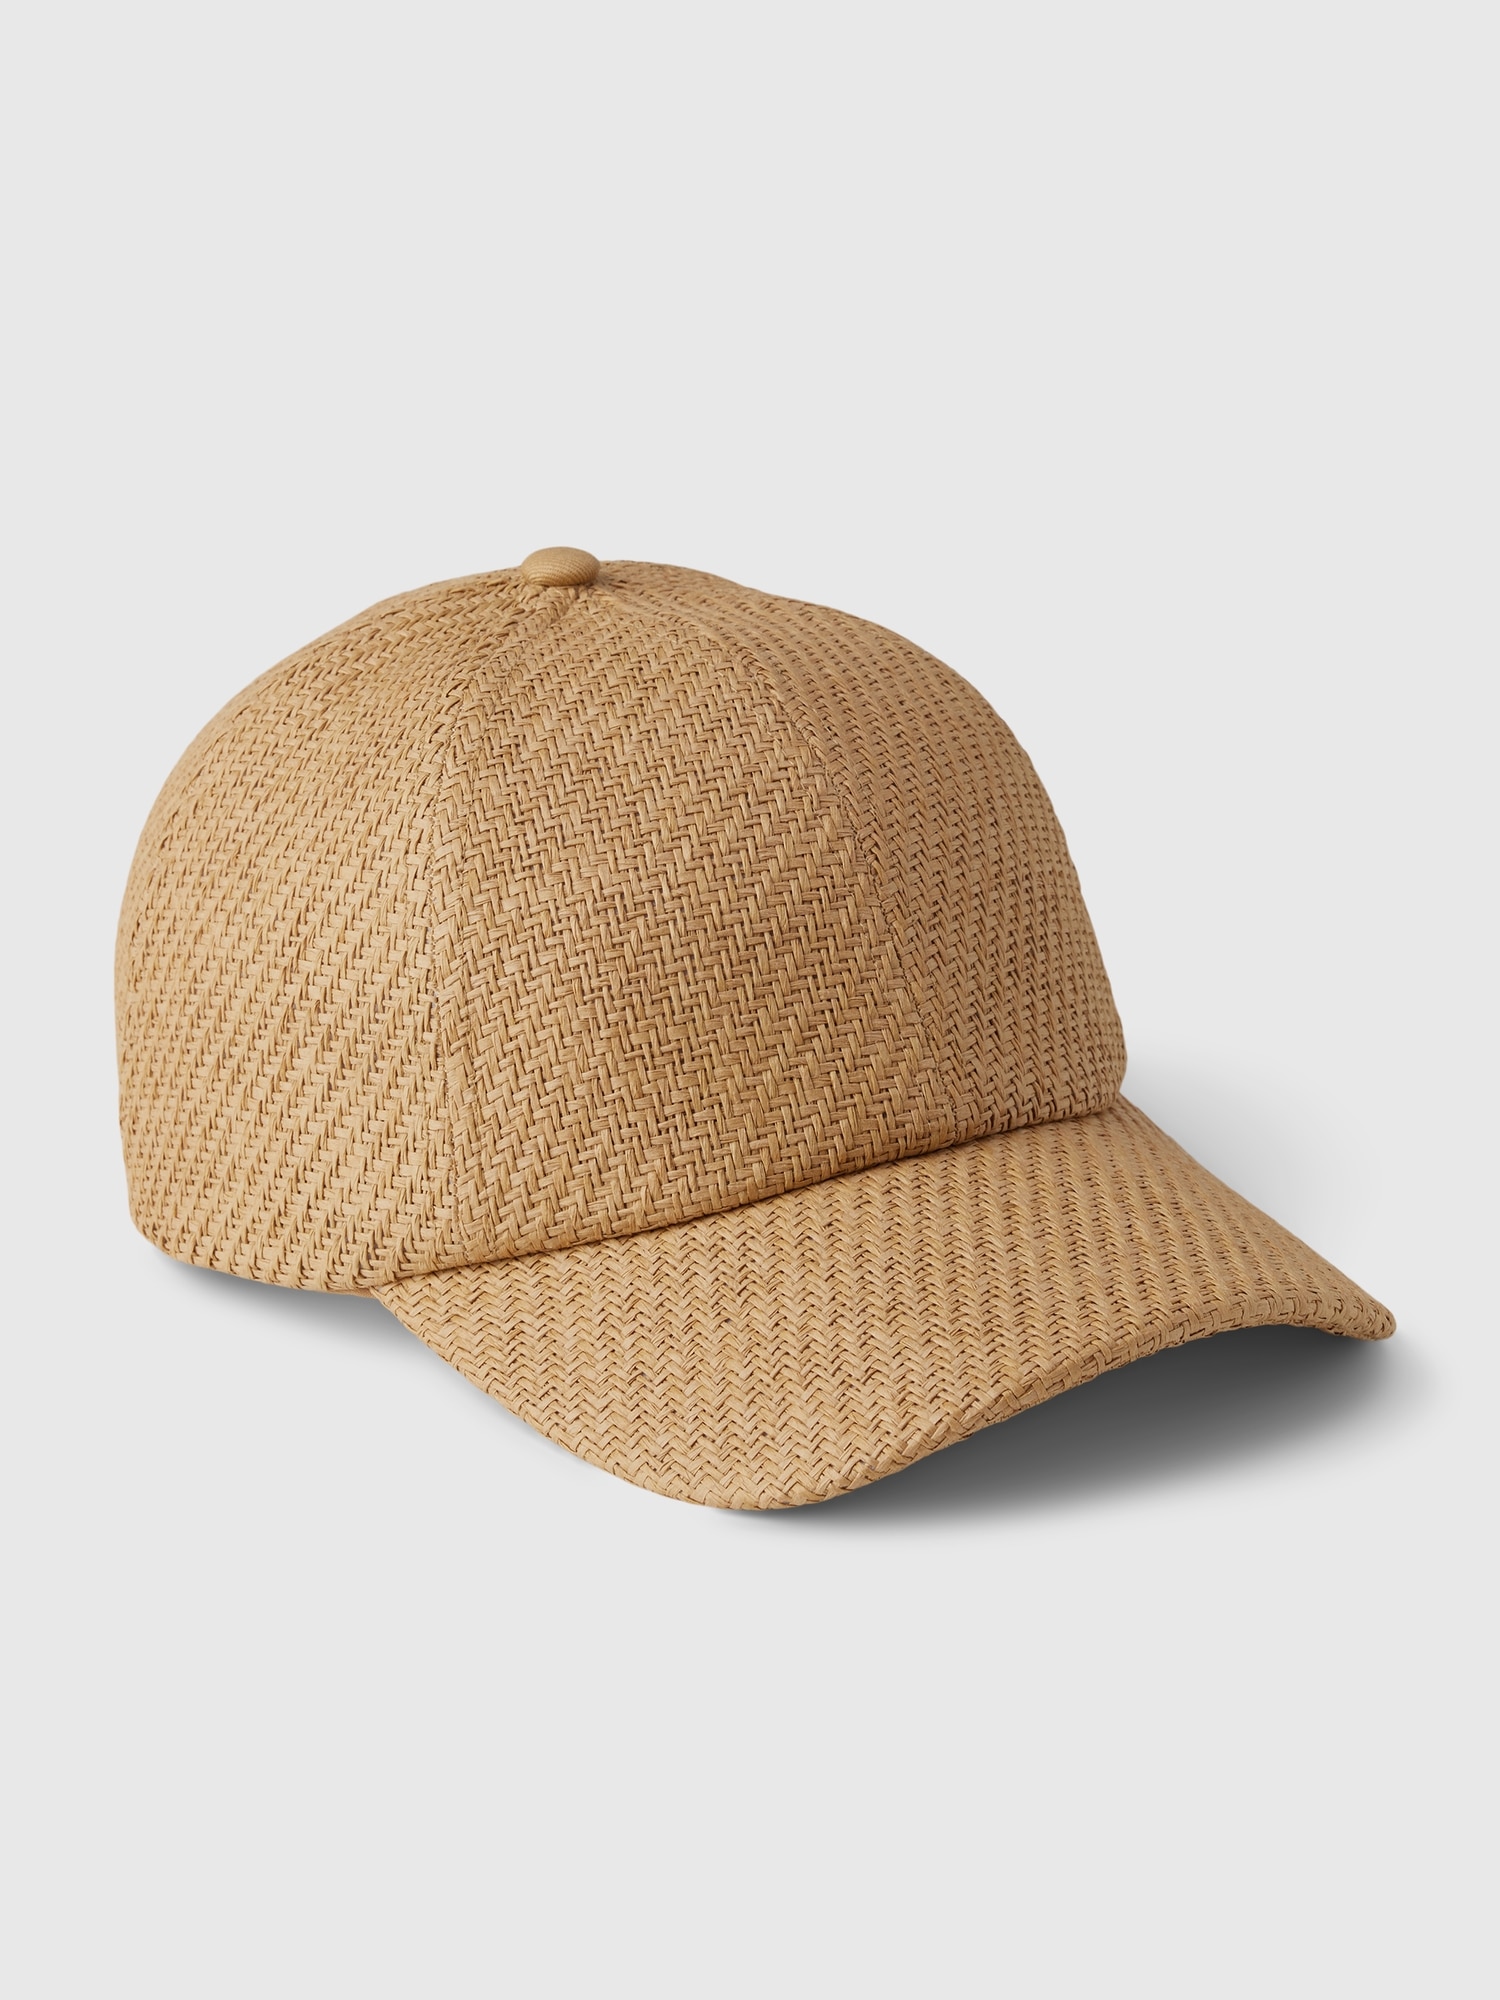 Straw Baseball Hat